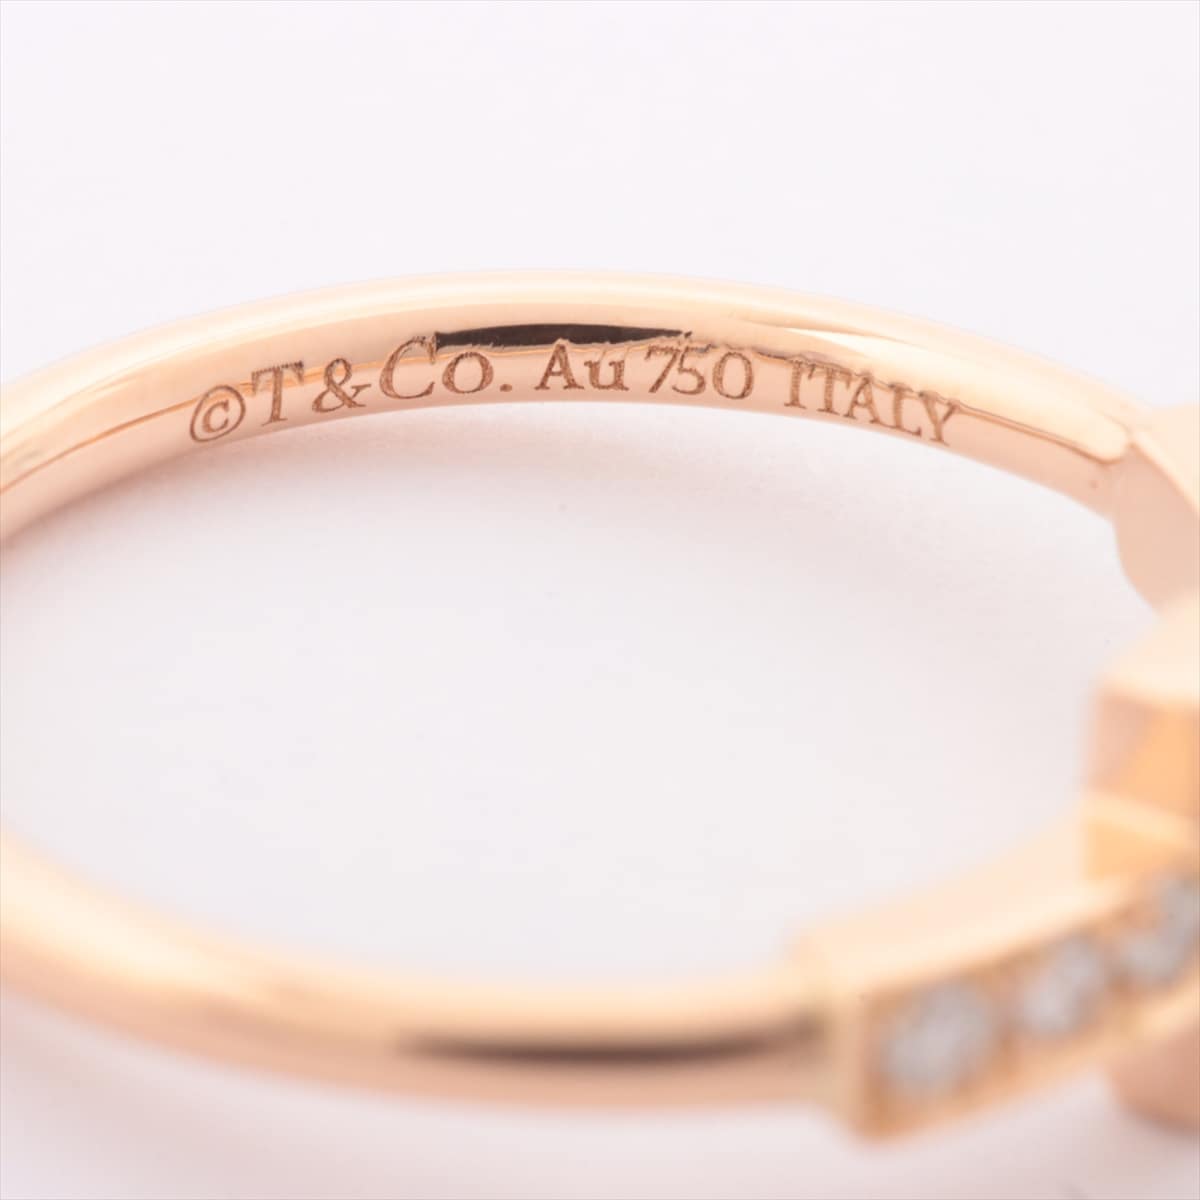 Tiffany T Wire diamond rings 750(PG) 2.2g